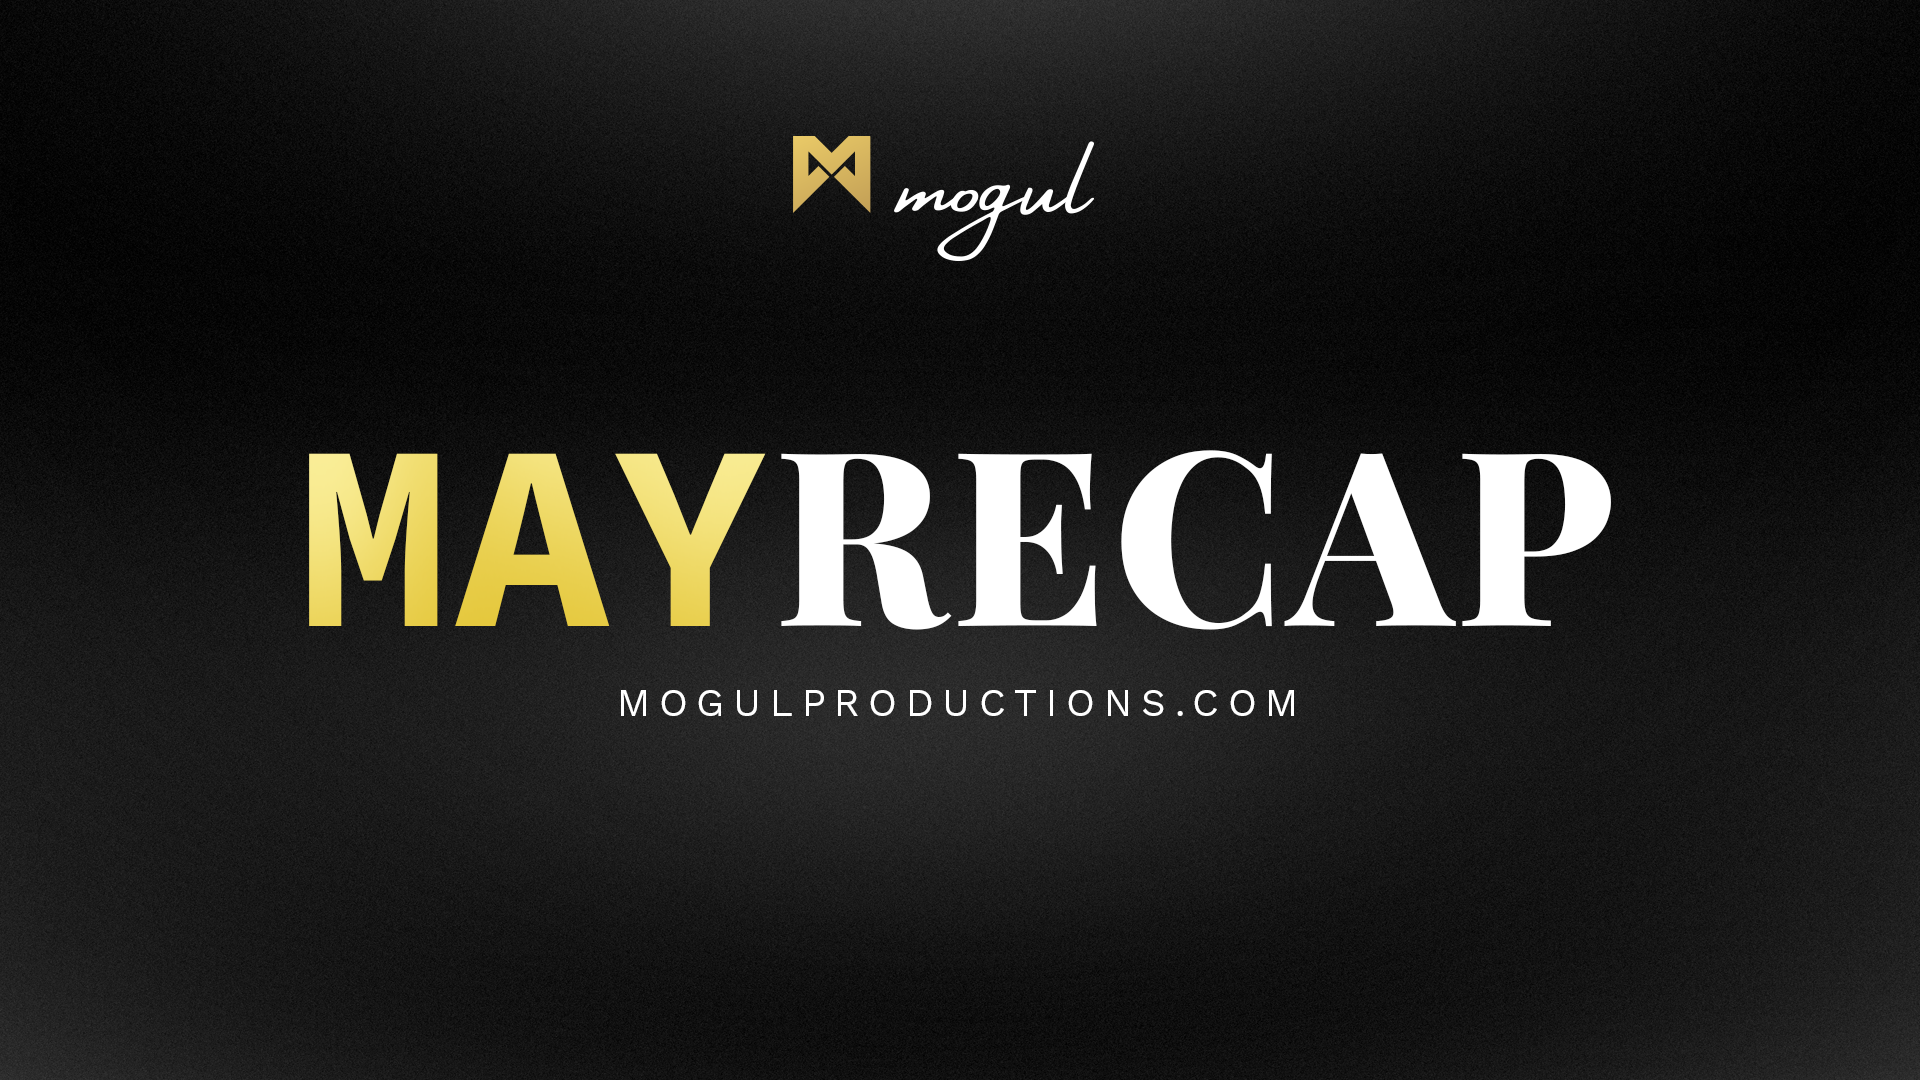 Mogul Productions - May Recap